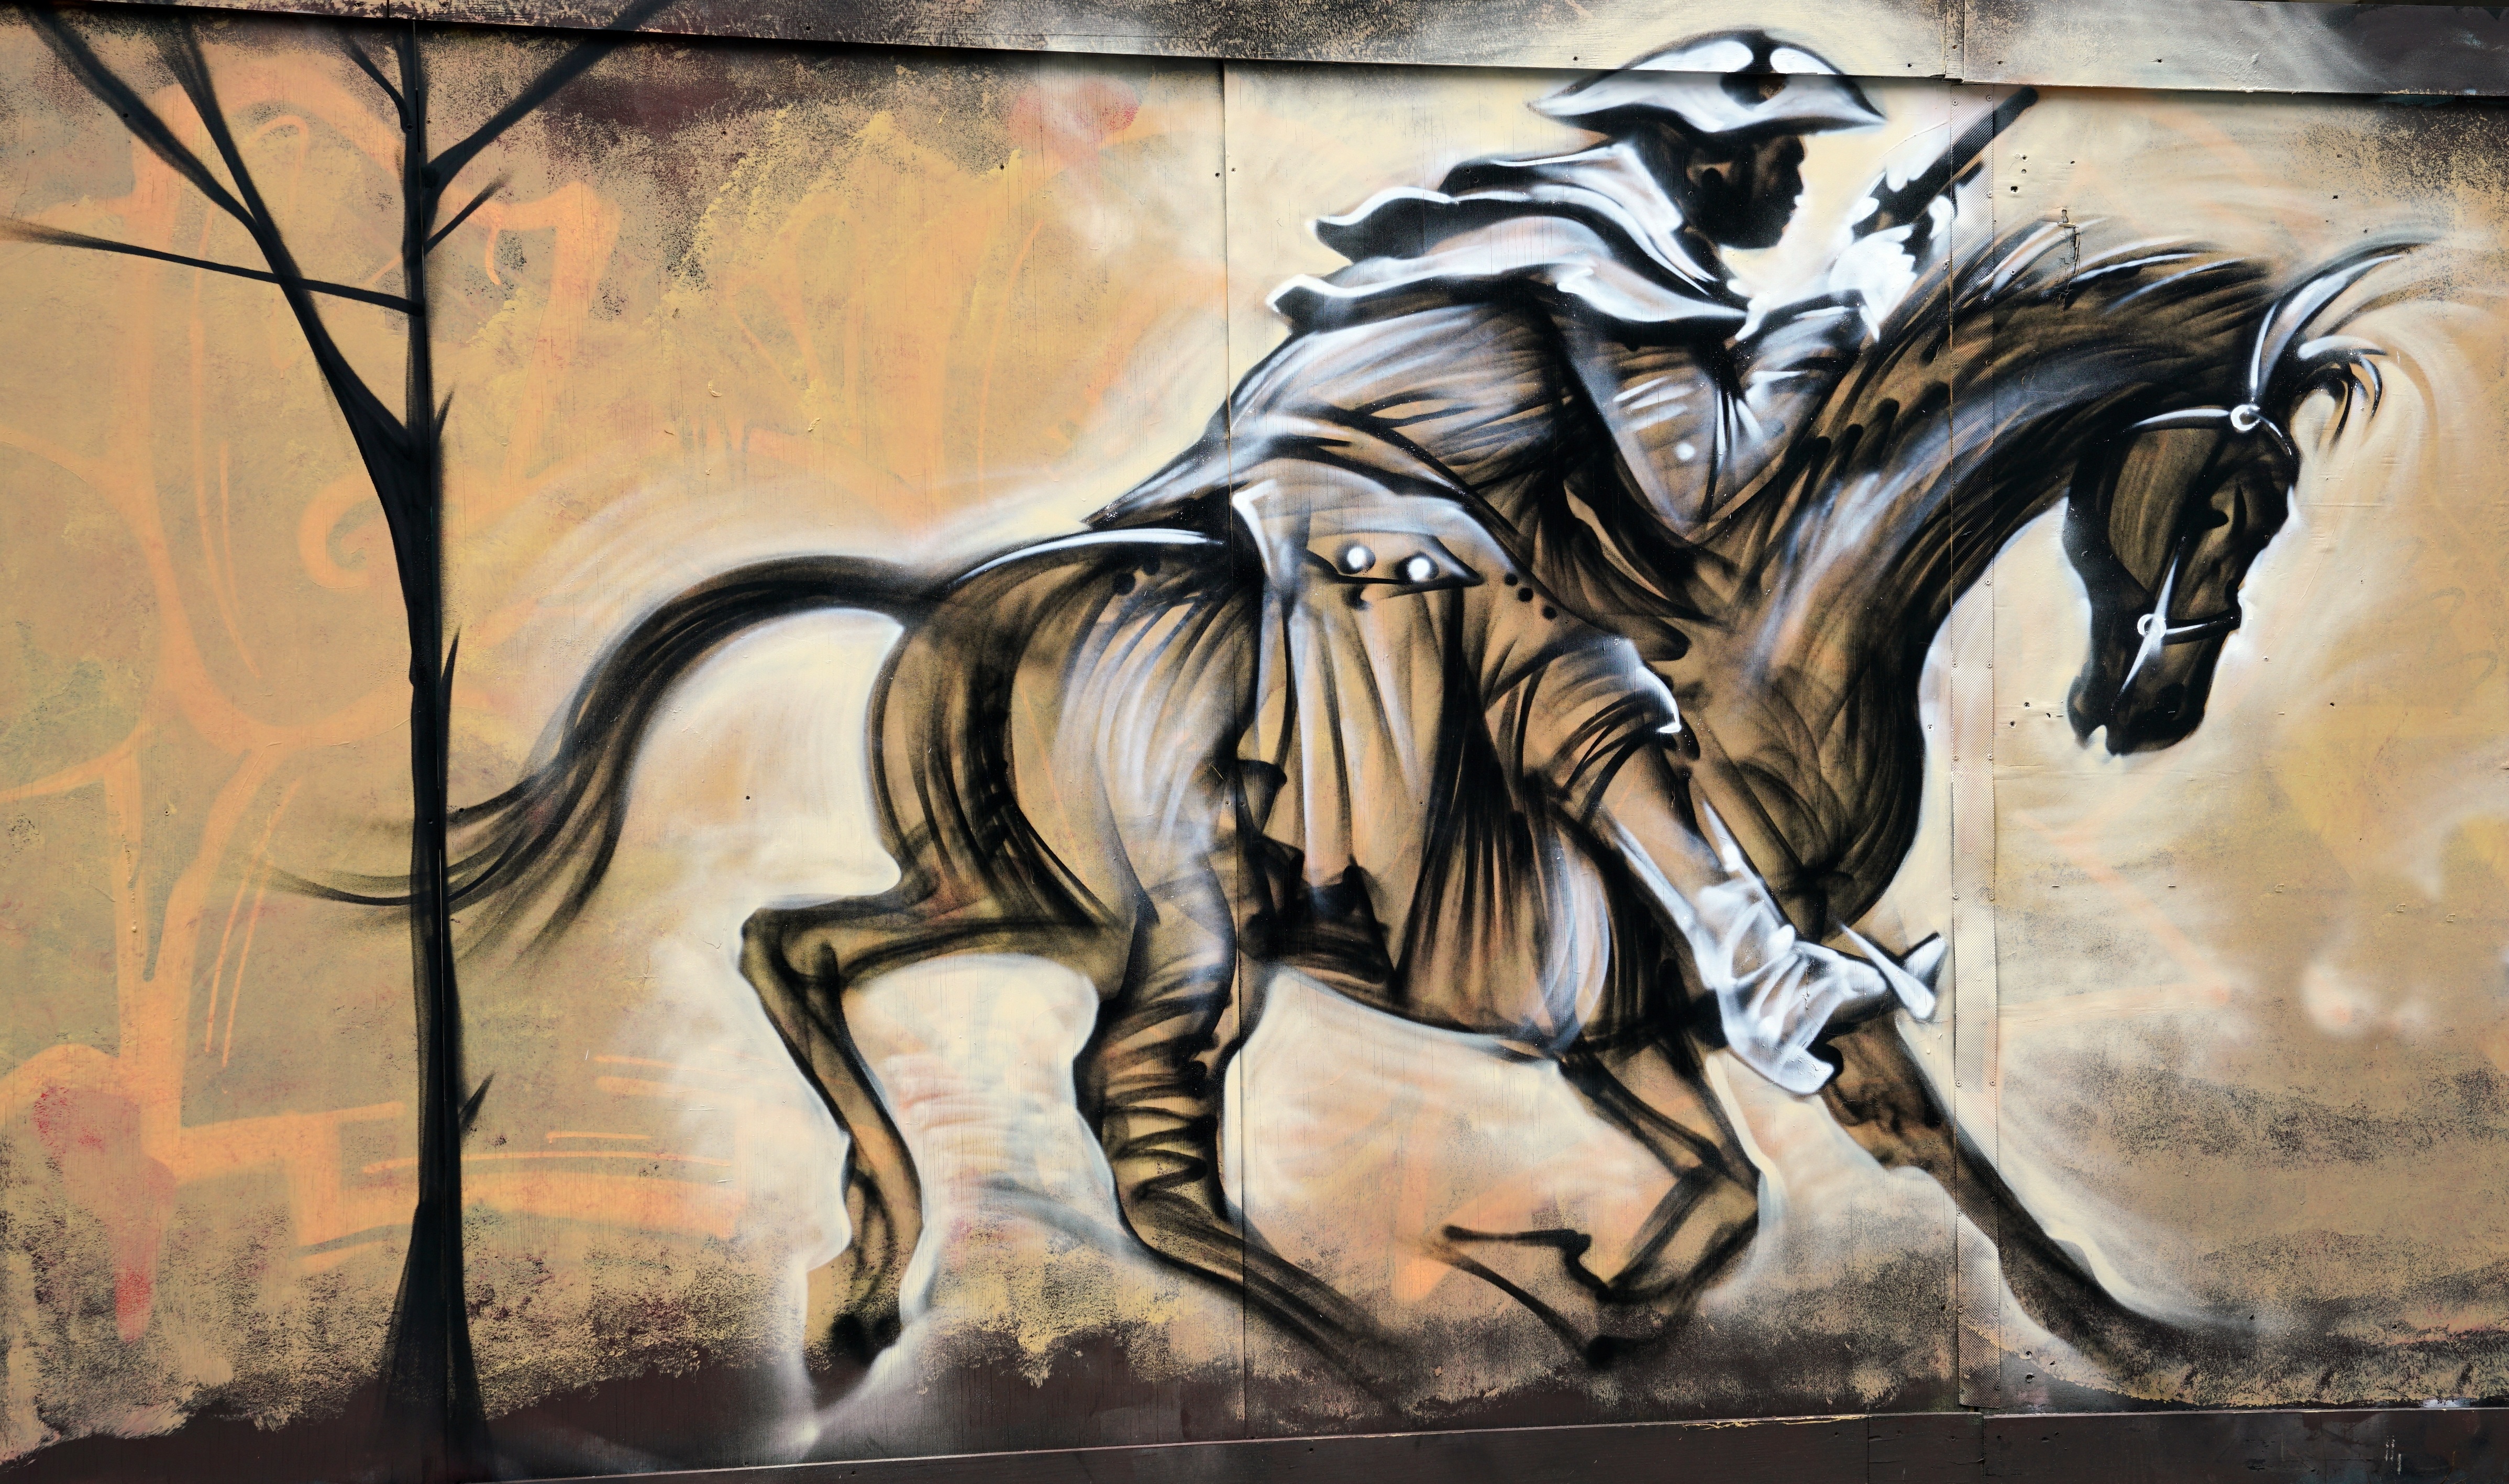 Graffiti Wall Art on Wall Street in London by Richard Mcall